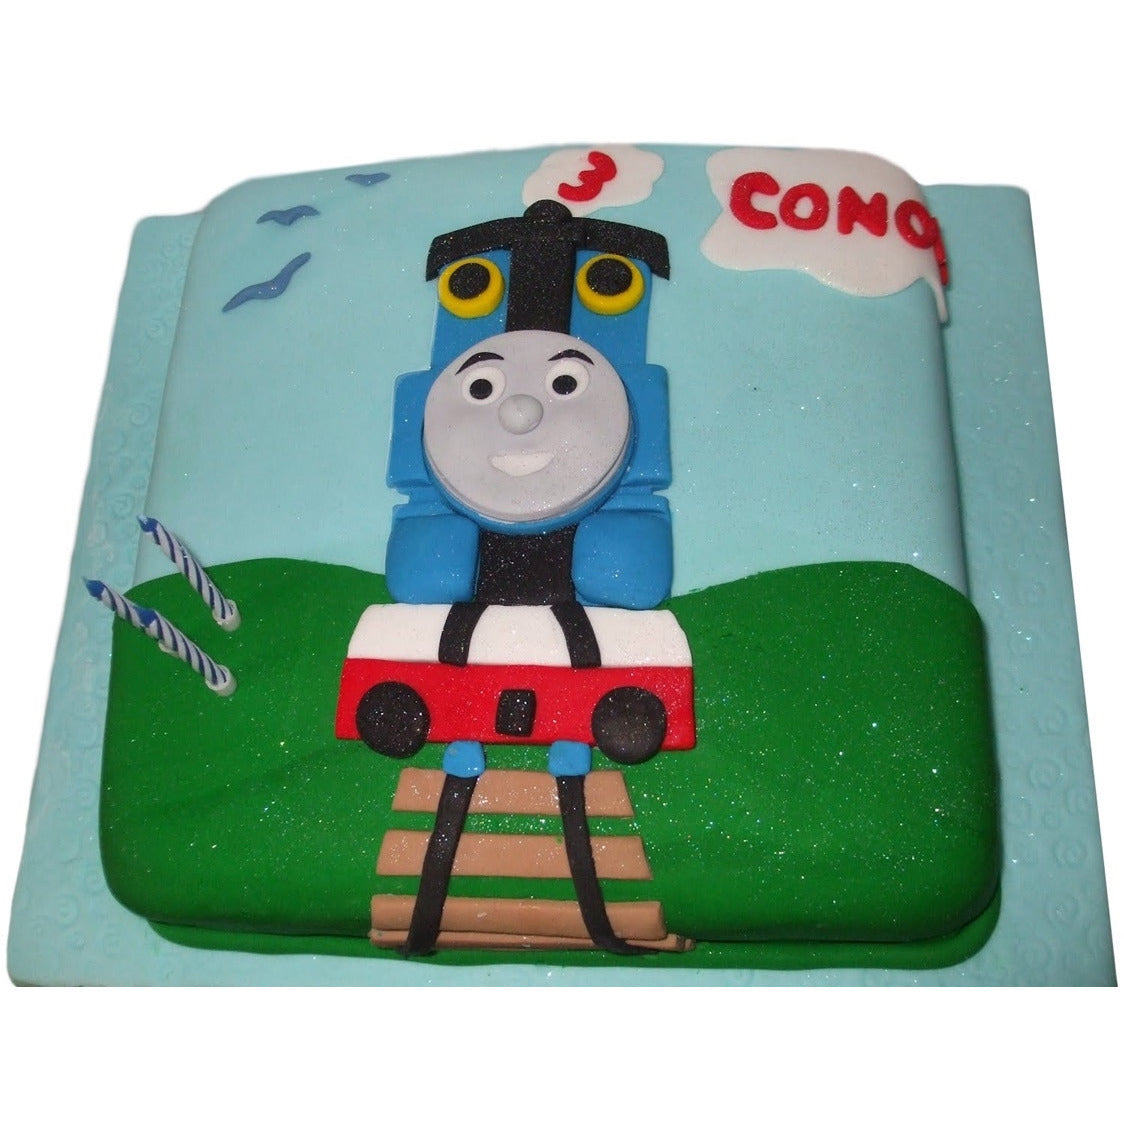 Coolest Thomas The Train Birthday Cake Design